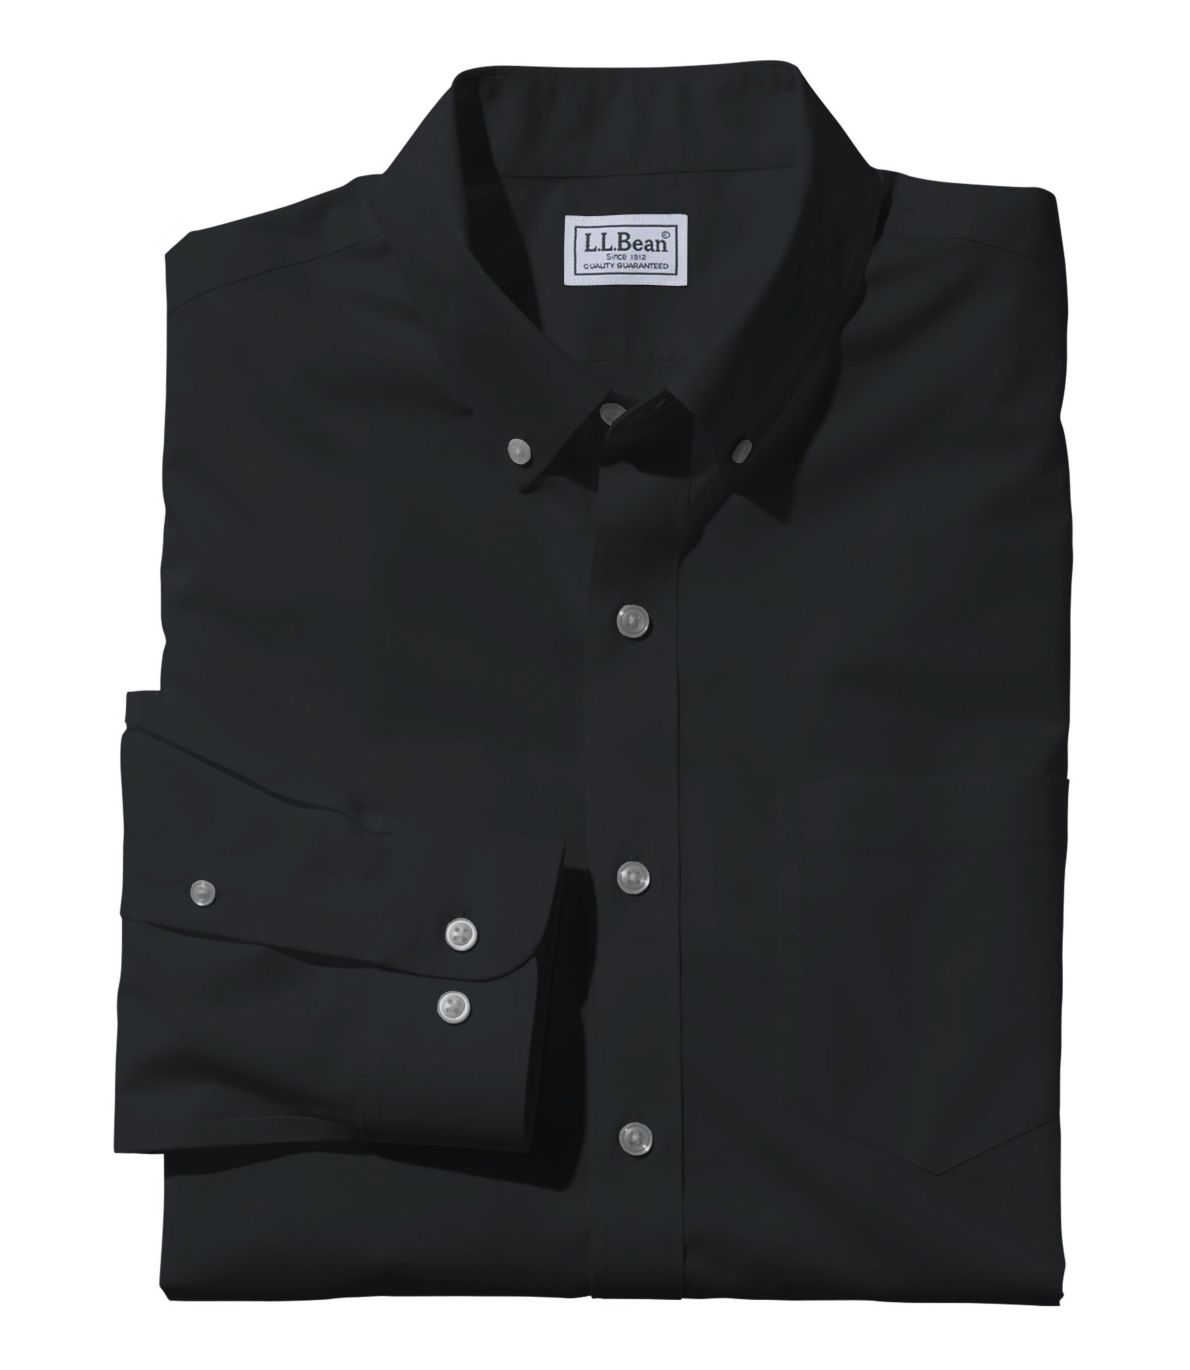 Men's L.L.Bean Wrinkle-Free Poplin Shirt, Long-Sleeve